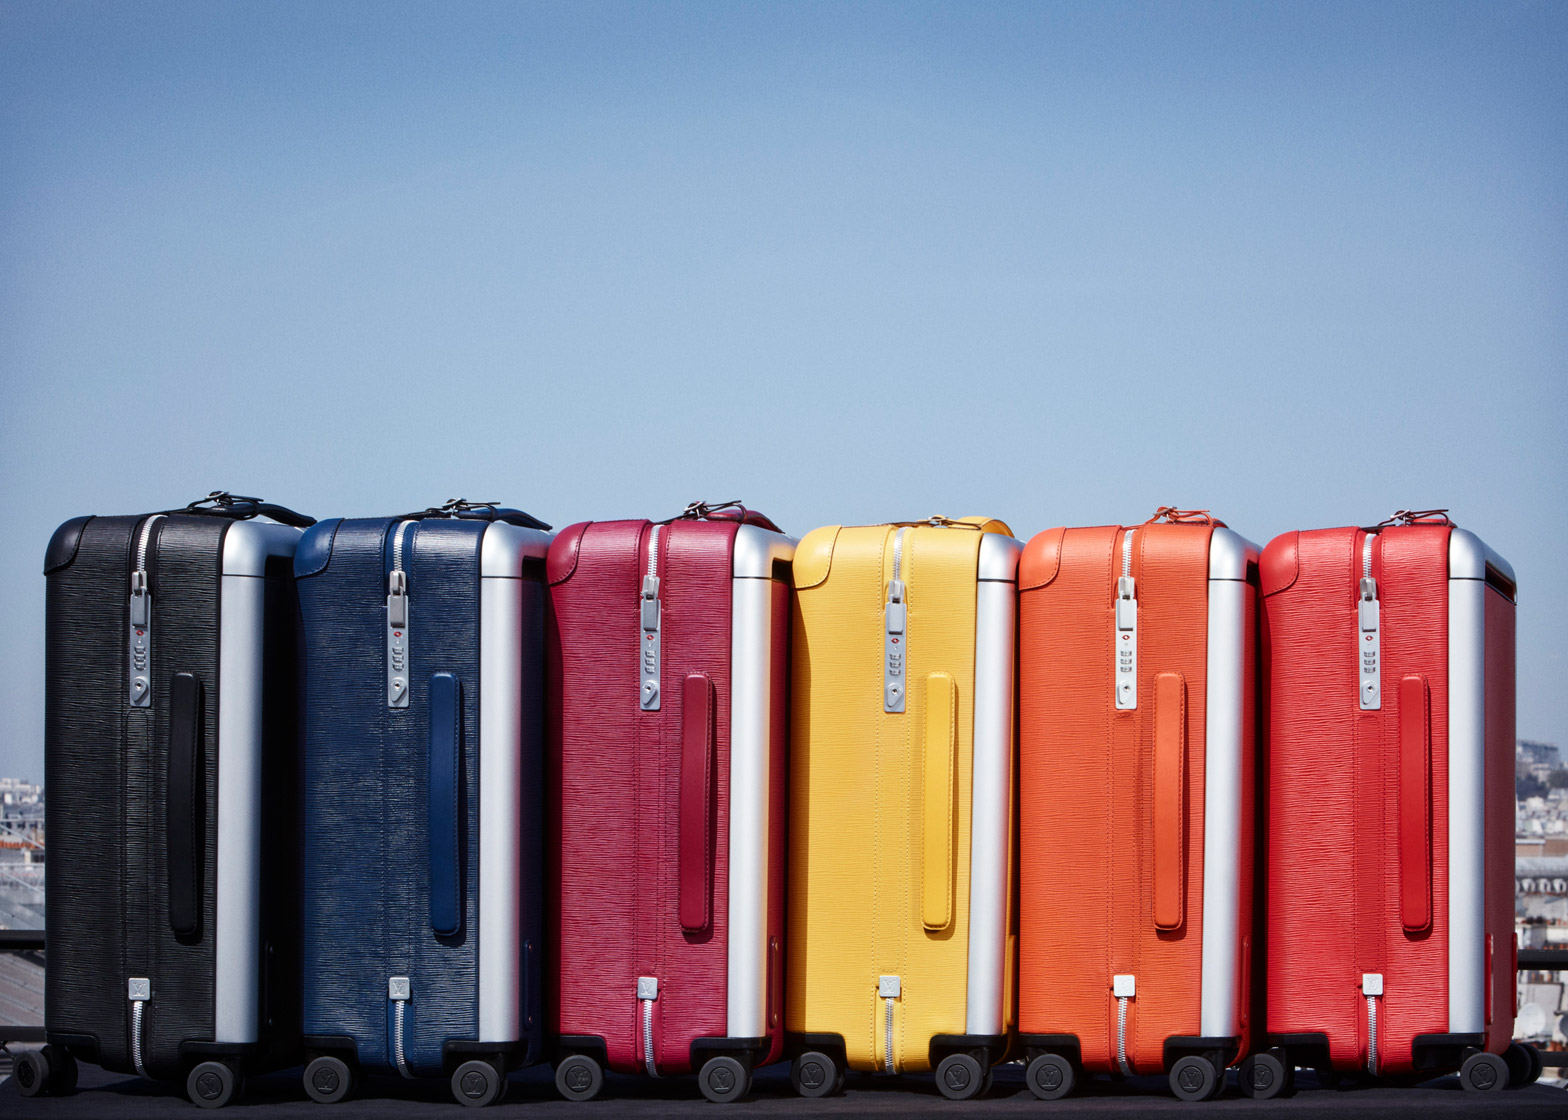 louis-vuitton-lv-rolling-luggage-suitcase-marc-newson-product-design-colour-hard-shell-trunk-lightweight-cabin-bag_dezeen_1568_0.jpg